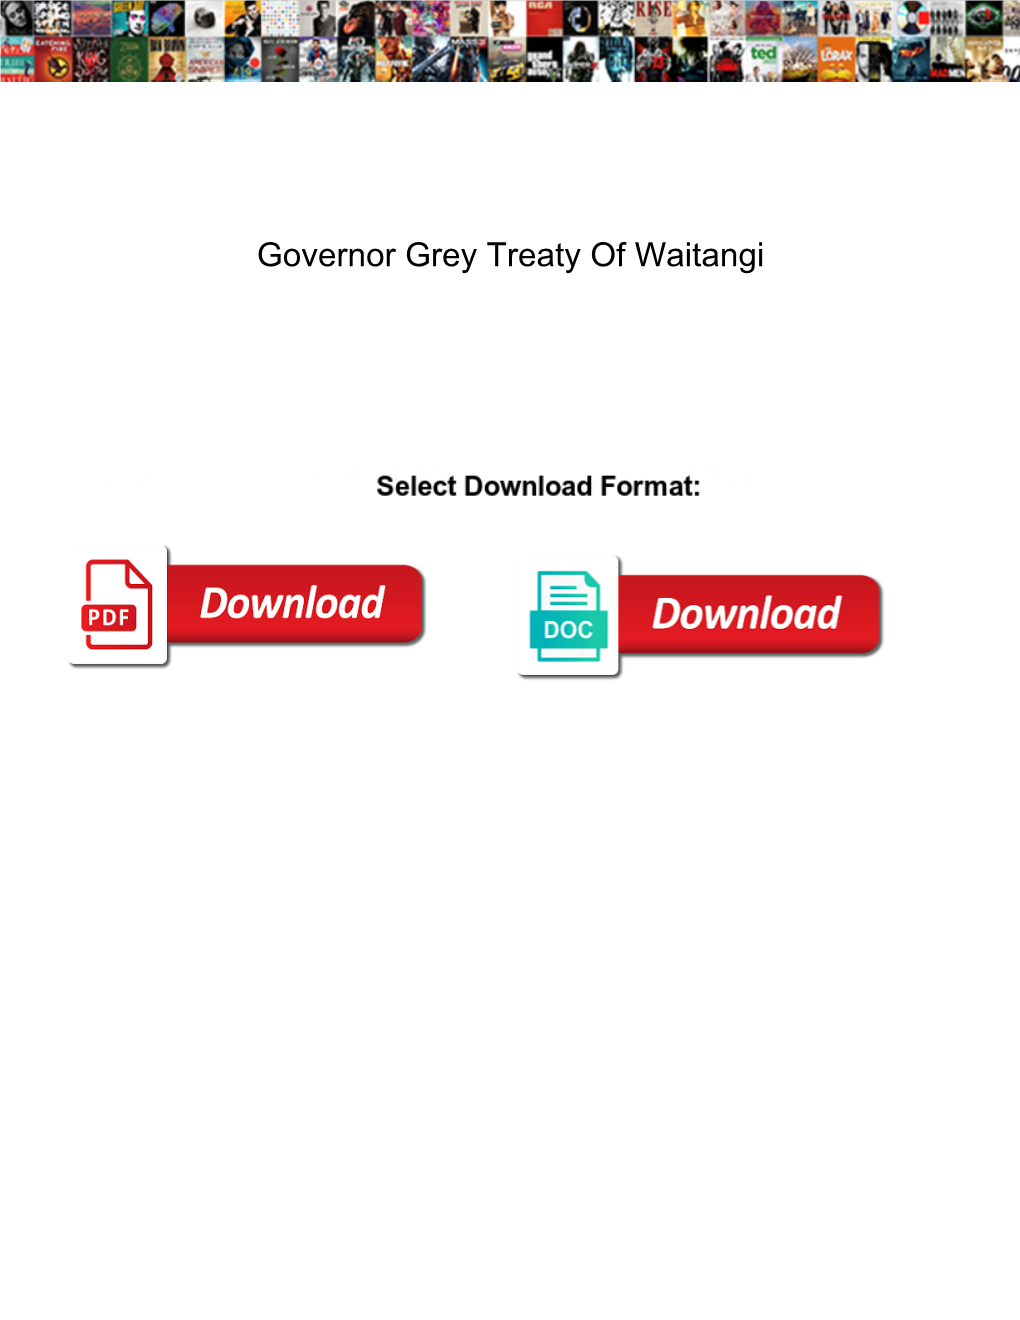 Governor Grey Treaty of Waitangi